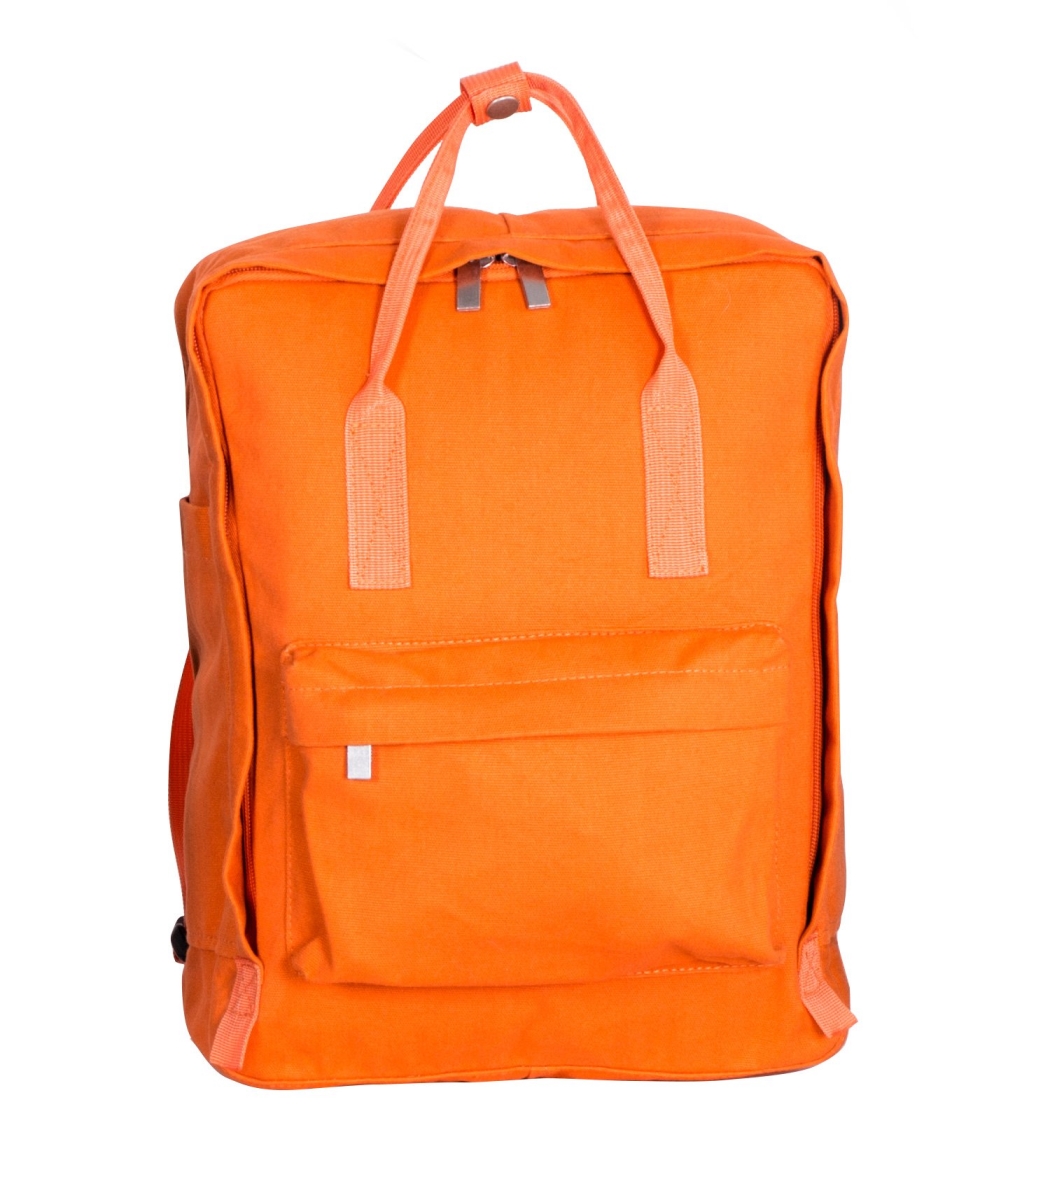 Mbk002-orange Mini Backpack With Tablet Compartment - Orange